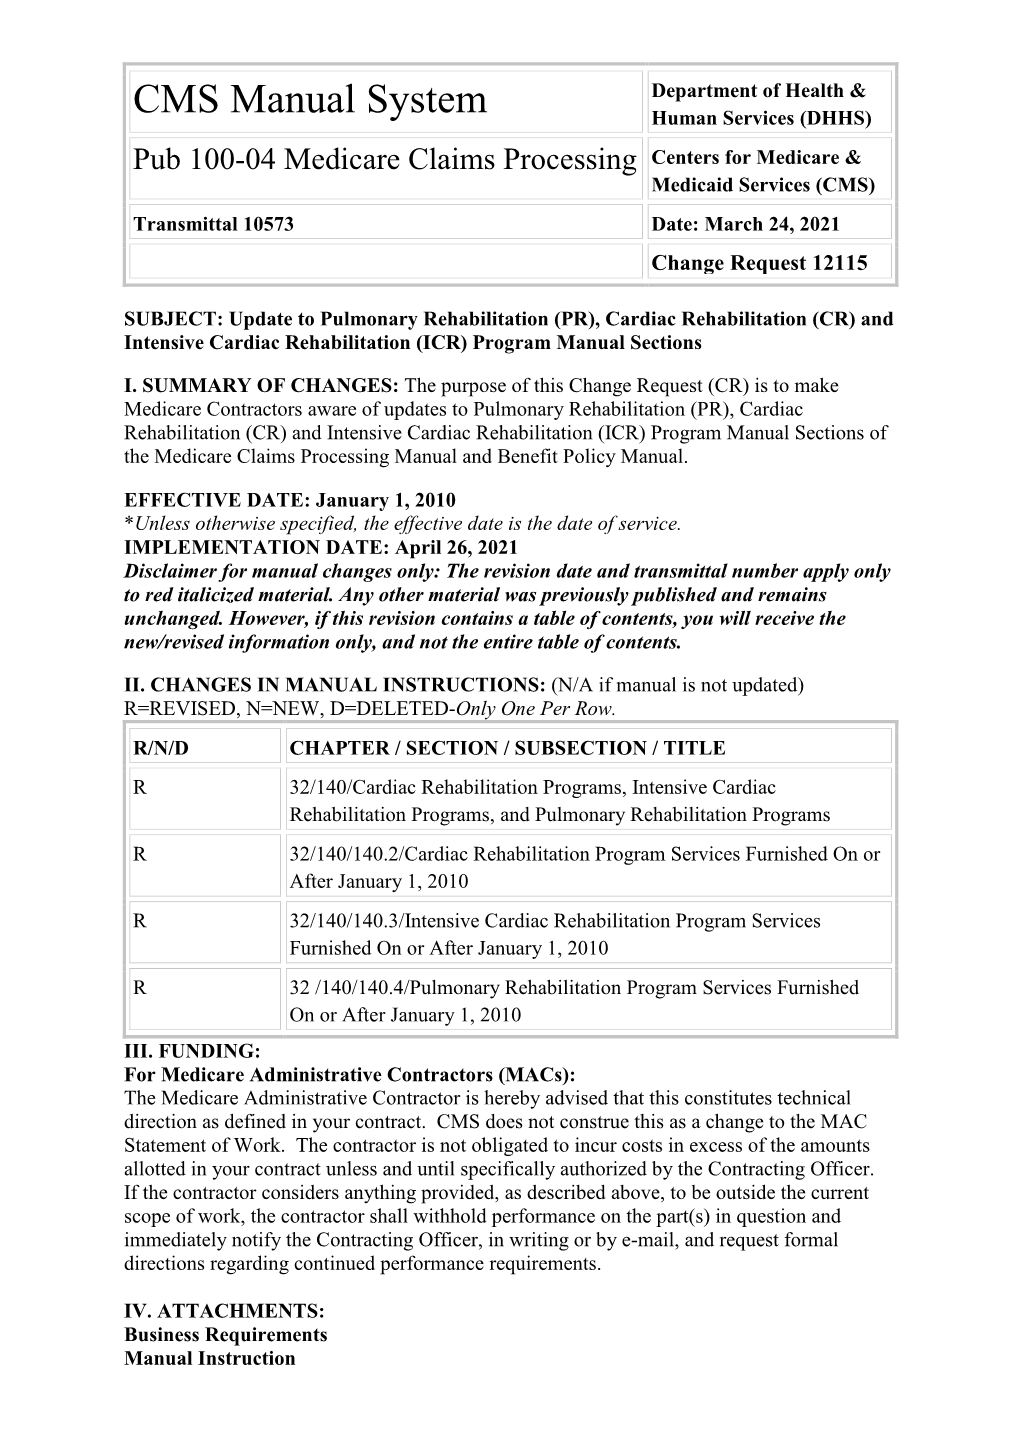 Cardiac Rehabilitation (CR) and Intensive Cardiac Rehabilitation (ICR) Program Manual Sections